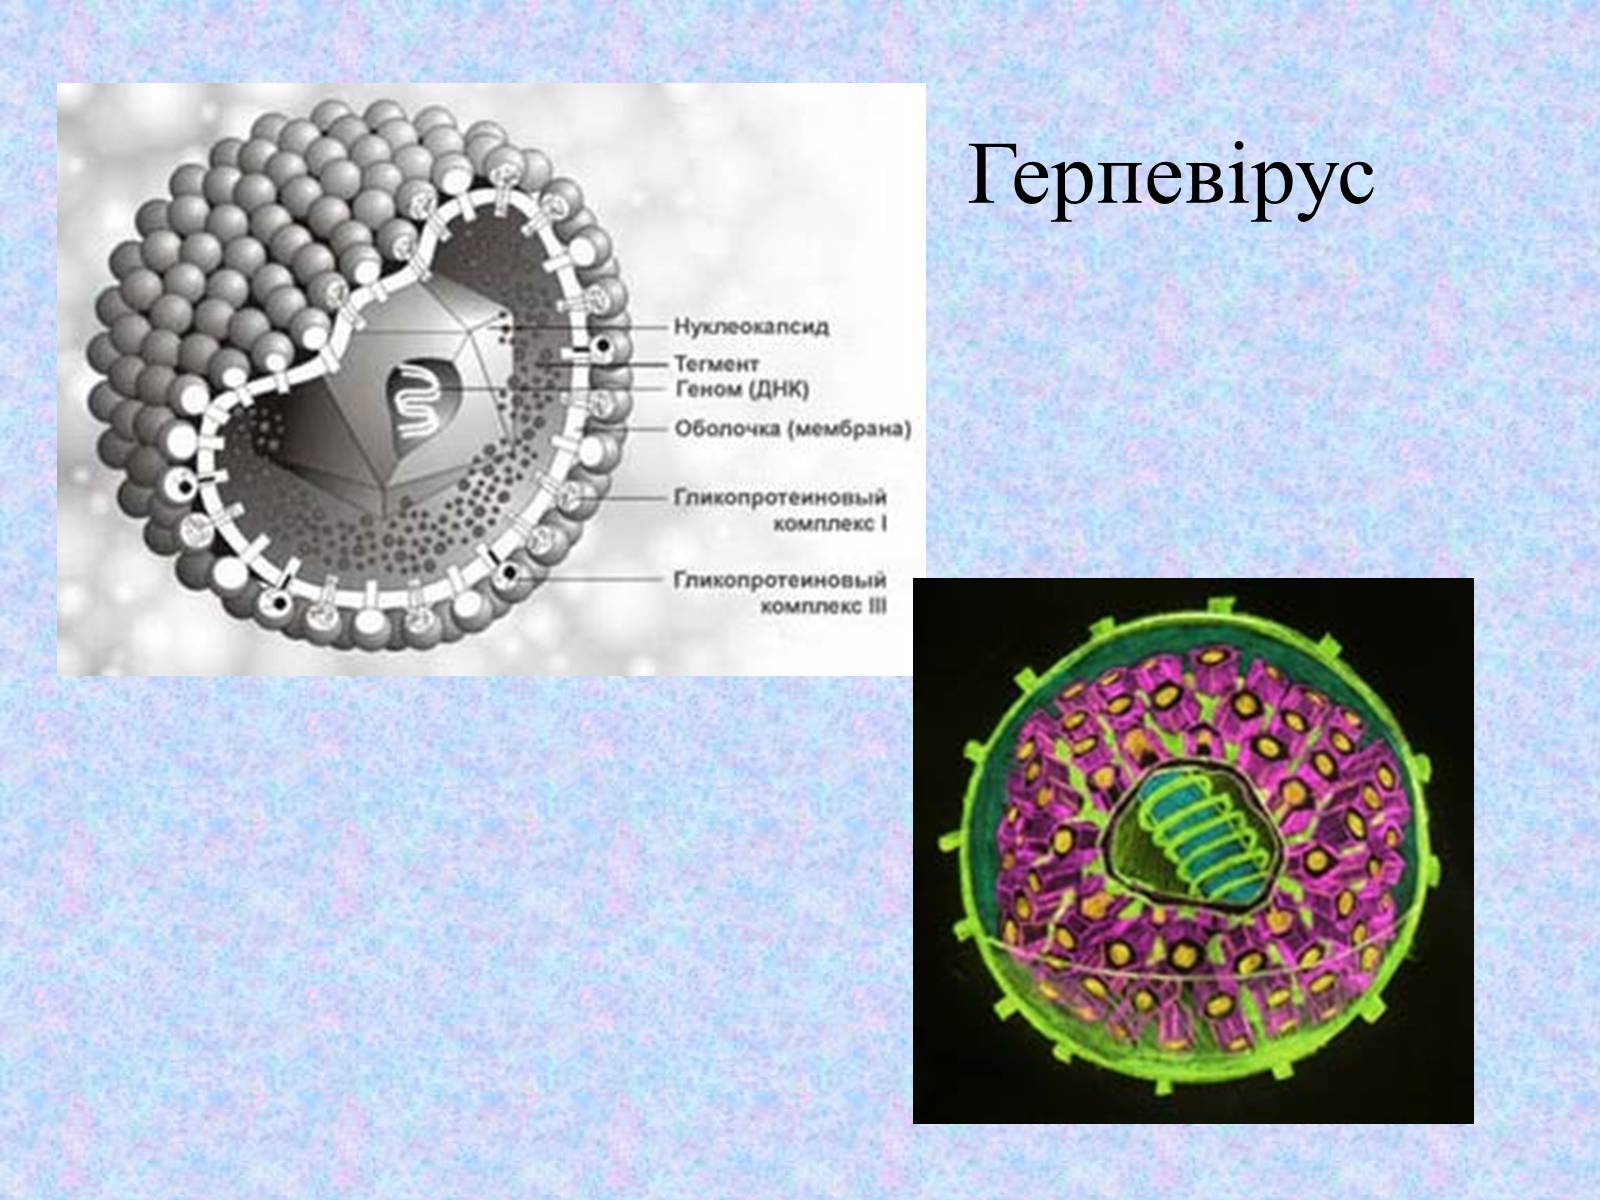 Строение вируса Herpesviridae